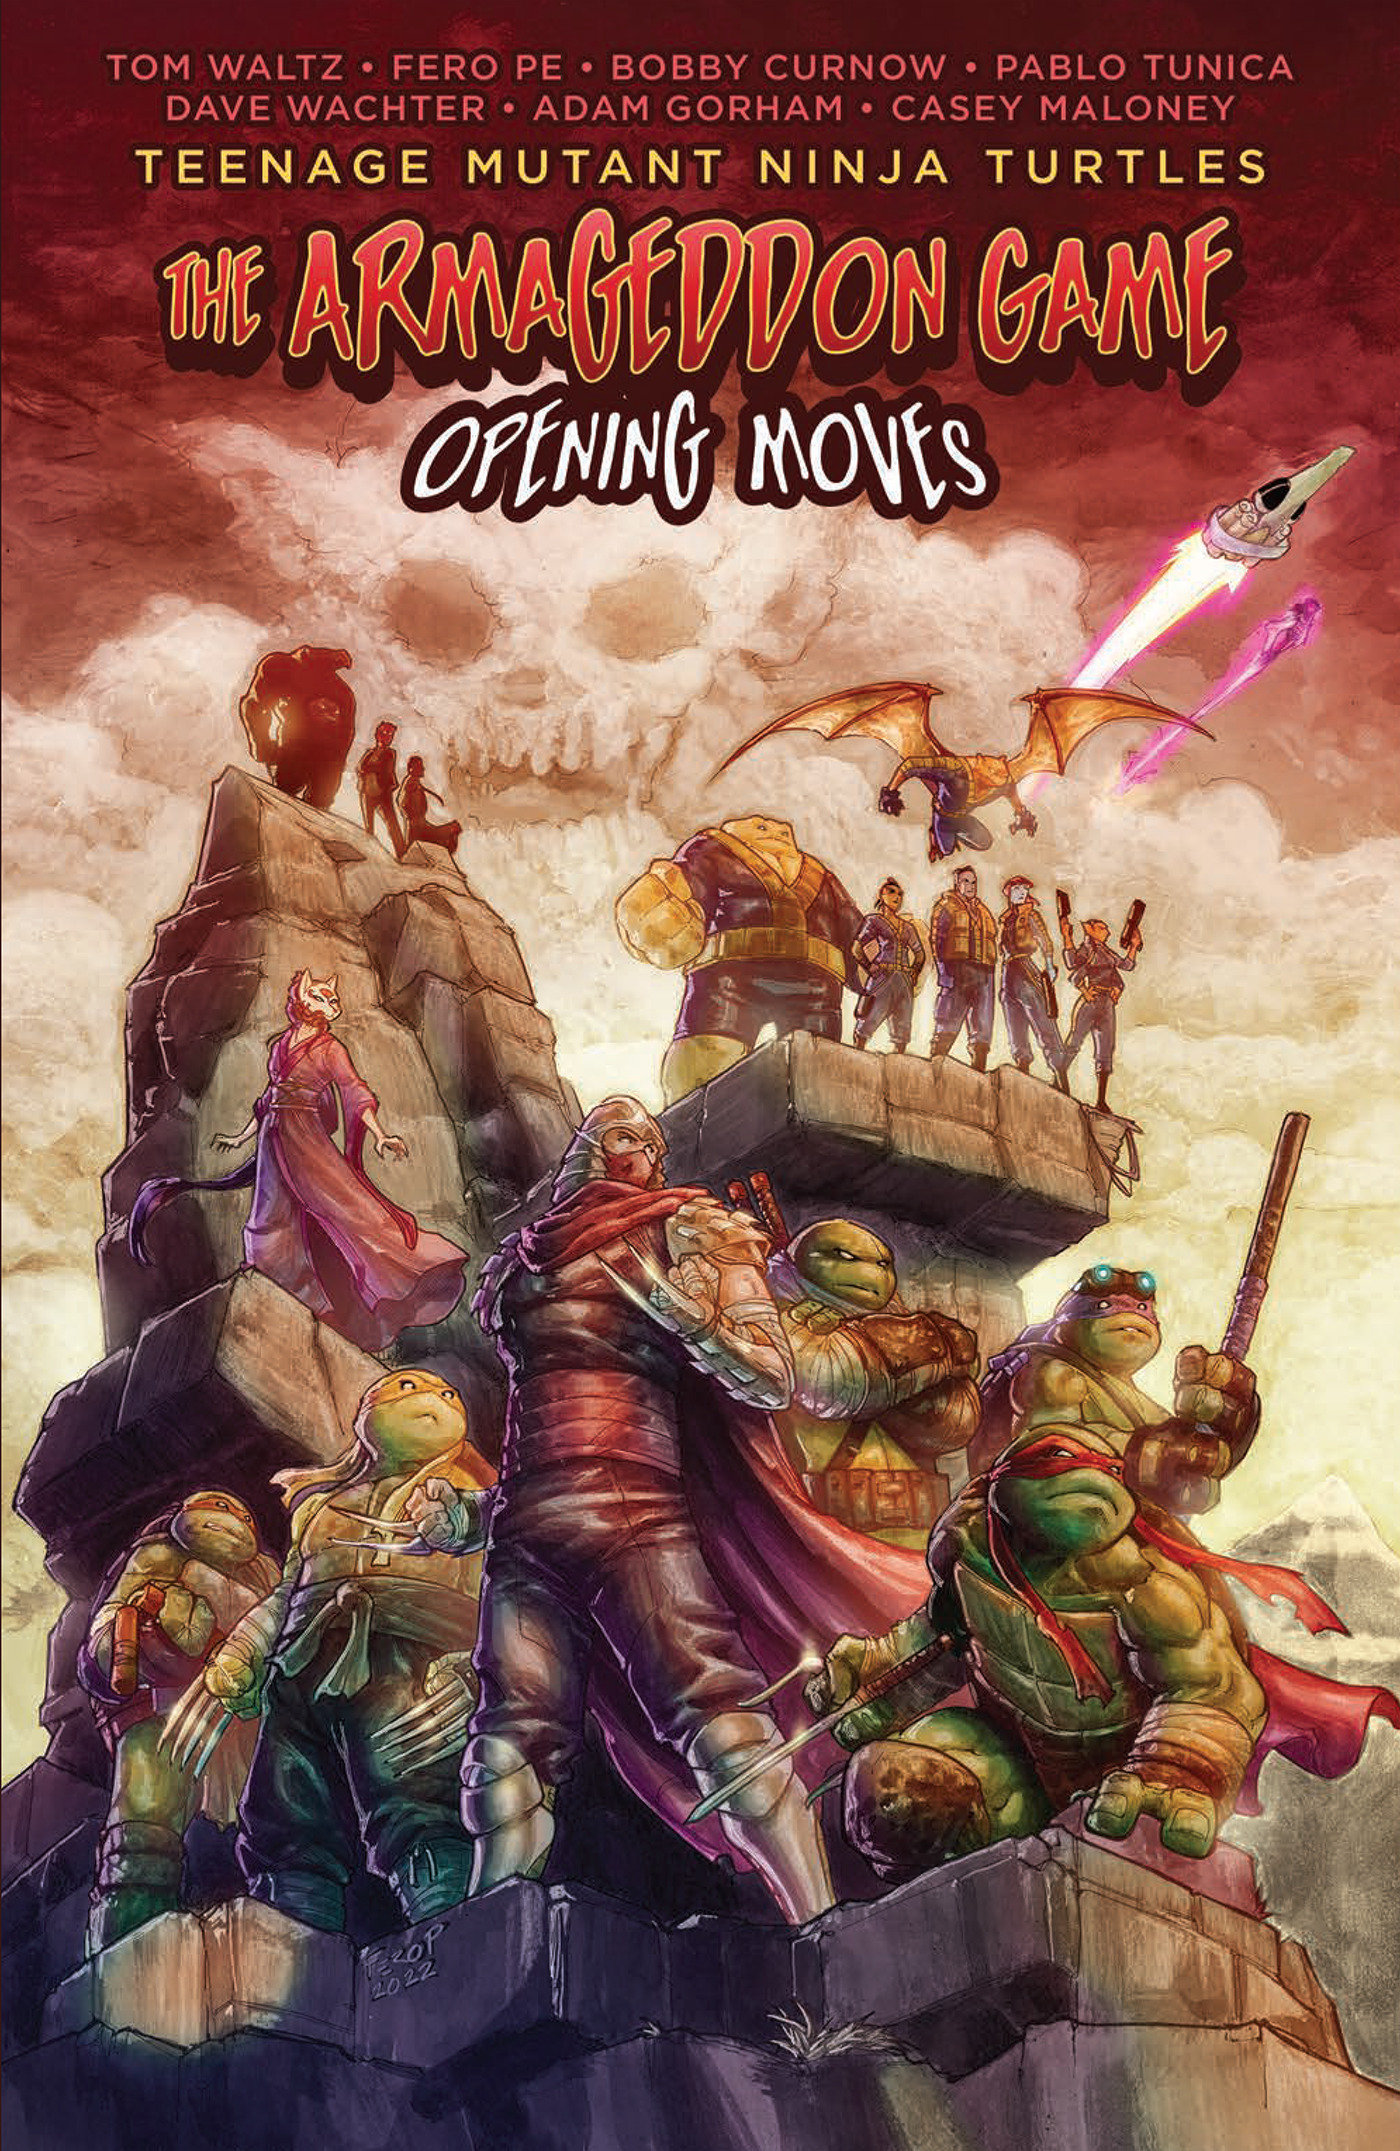 Buy Teenage Mutant Ninja Turtles The Armageddon Game Opening Moves Graphic Novel Mission